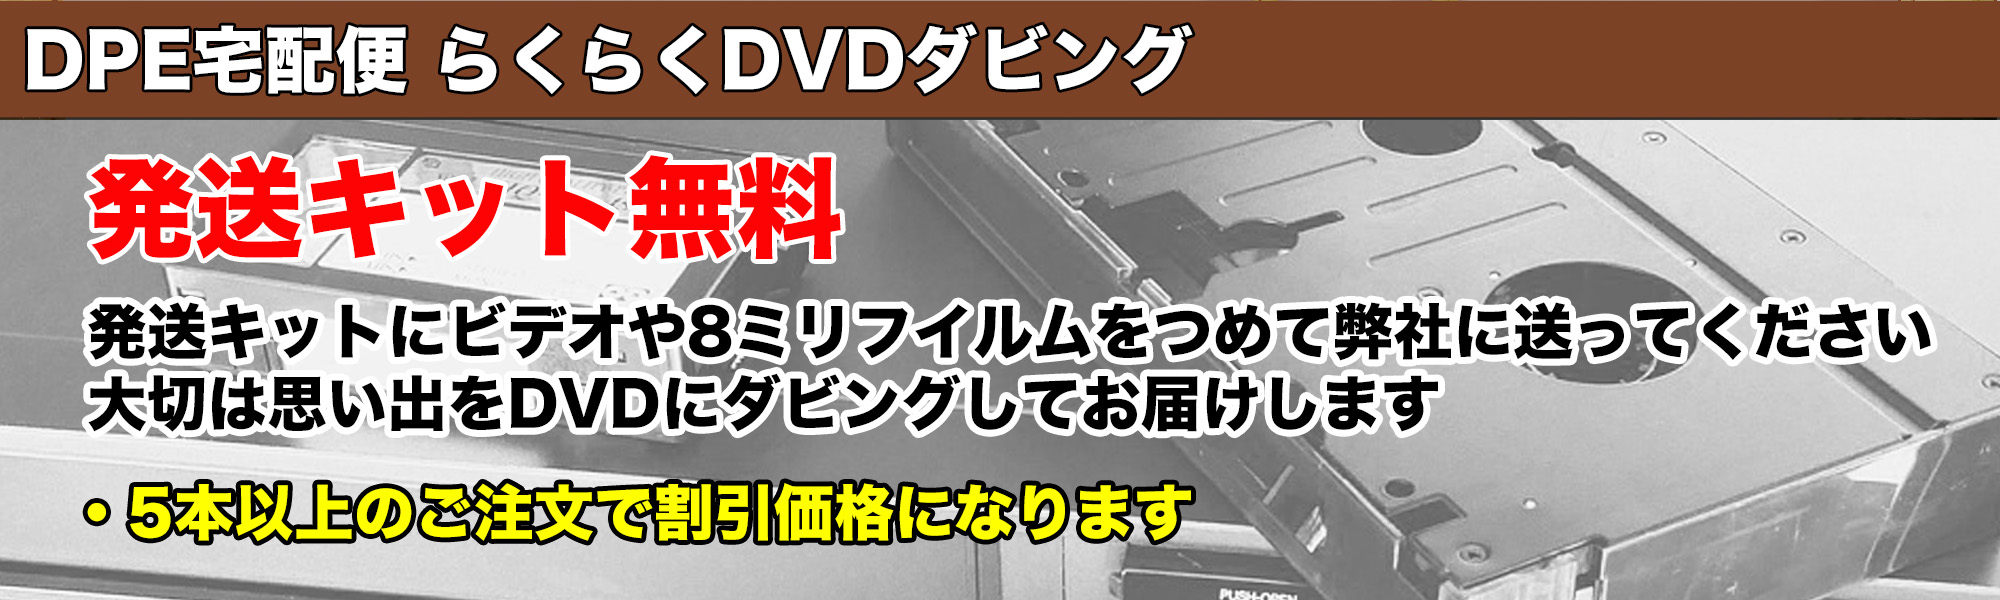 DVDダビングサービスバナー